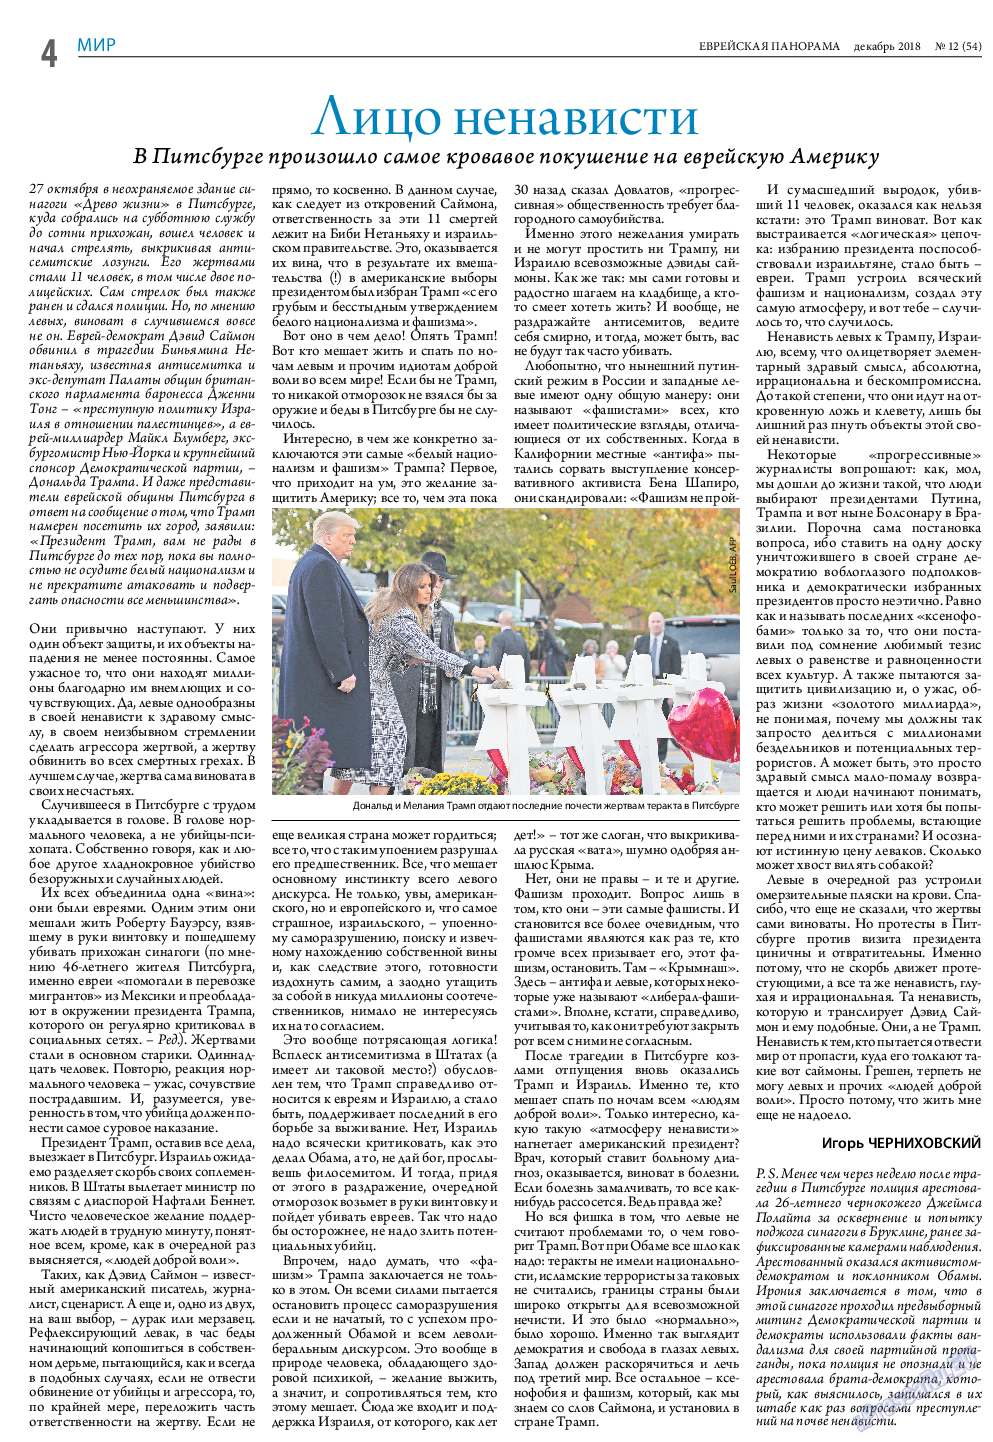 Еврейская панорама, газета. 2018 №12 стр.4